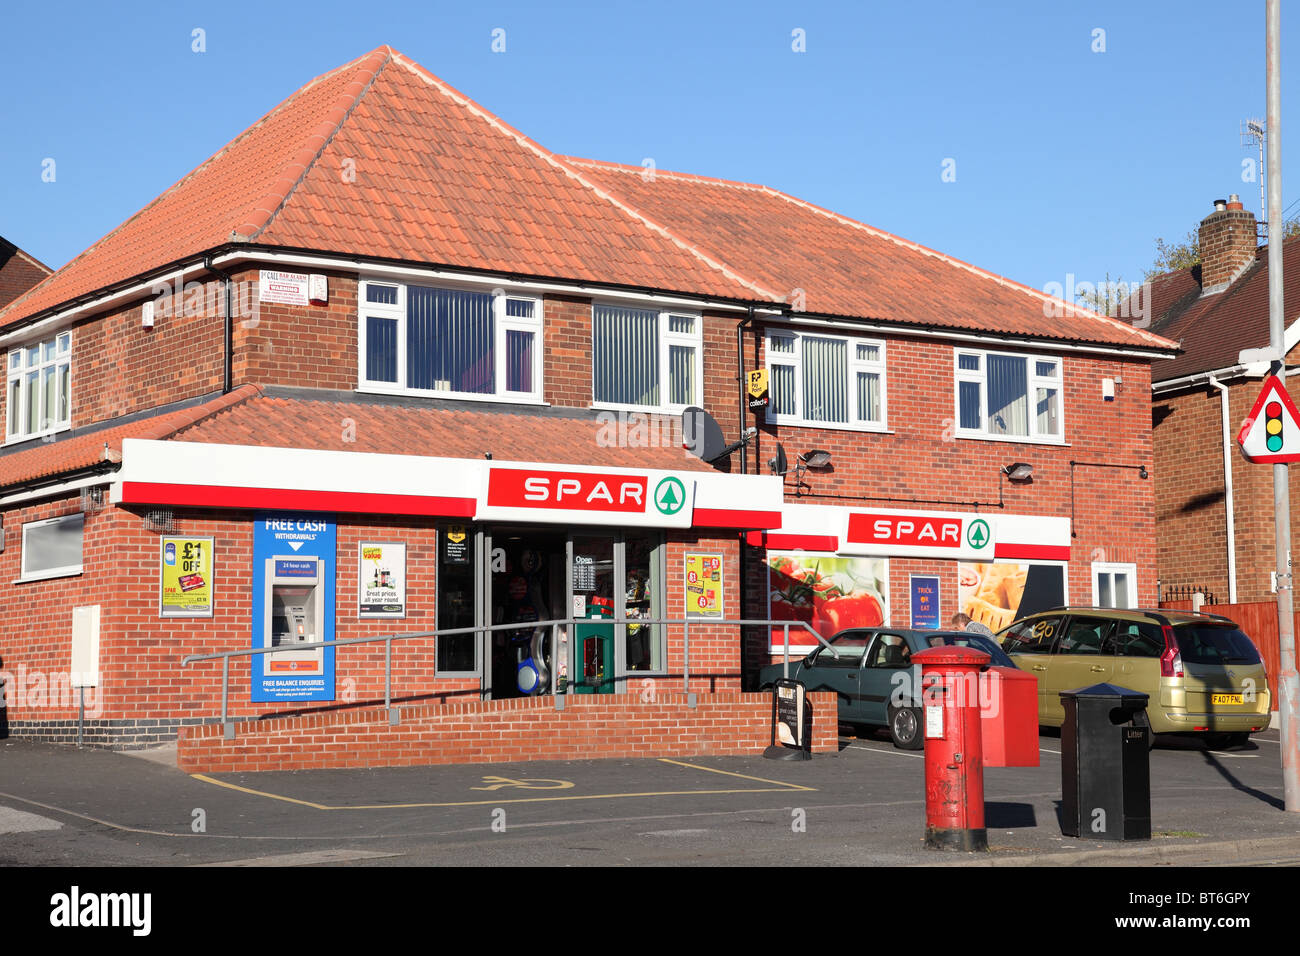 A Spar convenience store in a U.K. city. Stock Photo